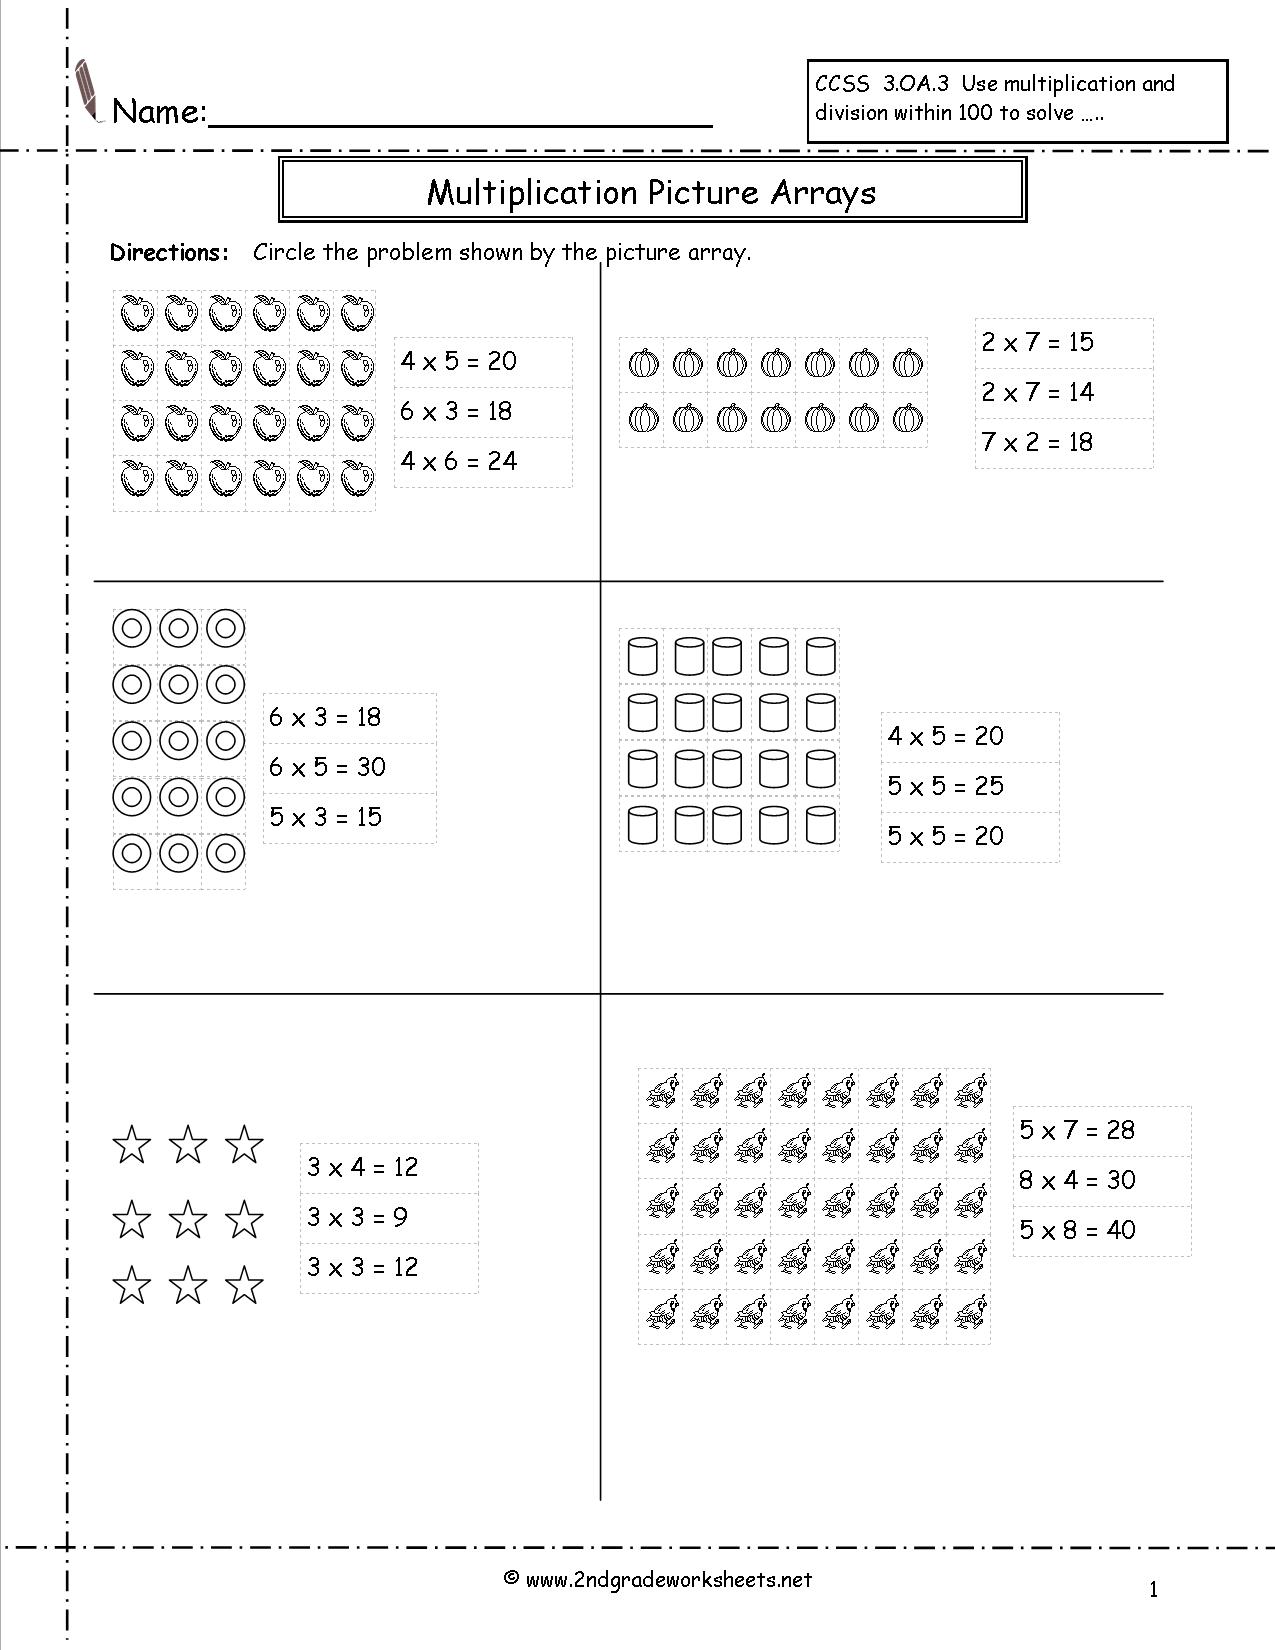 Multiplication Array Worksheets 3rd Grade Image